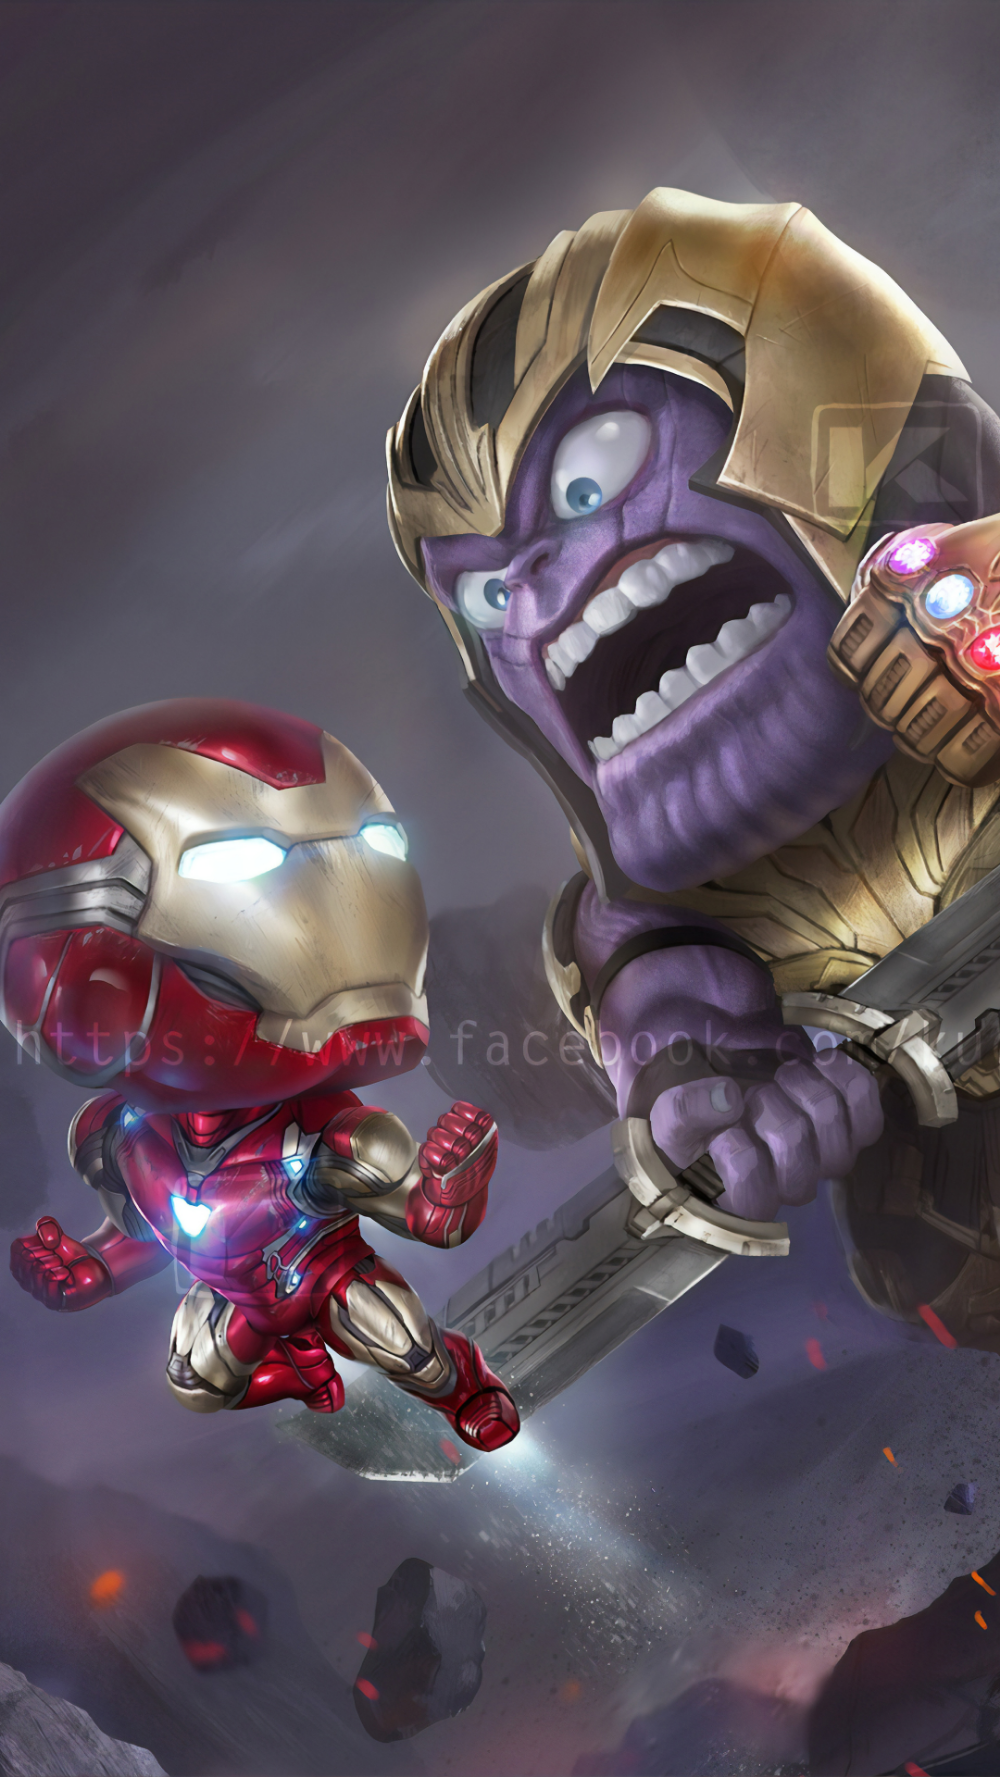 Chibi Iron Man And Thanos In 2160x3840 Resolution. Marvel comics wallpaper, Spiderman artwork, Marvel artwork